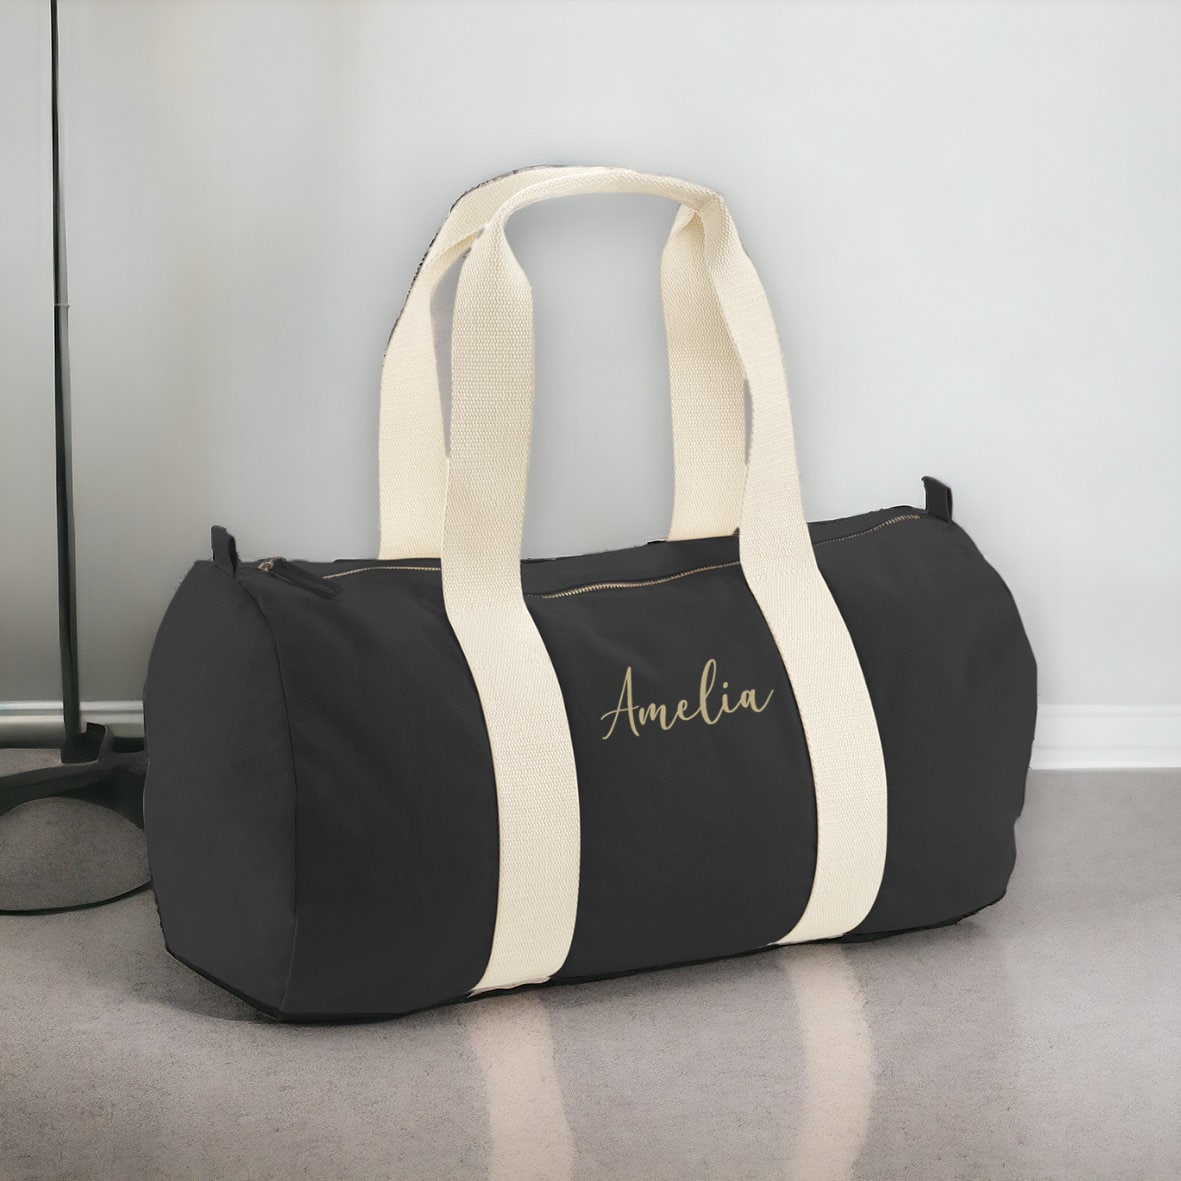 Personalised Name Duffel Bag, Bridesmaid Gifts, Cute Overnight Bag for Her, Custom Weekender Bag, Travel Bag, Initial Gym Bag, Hospital Bag